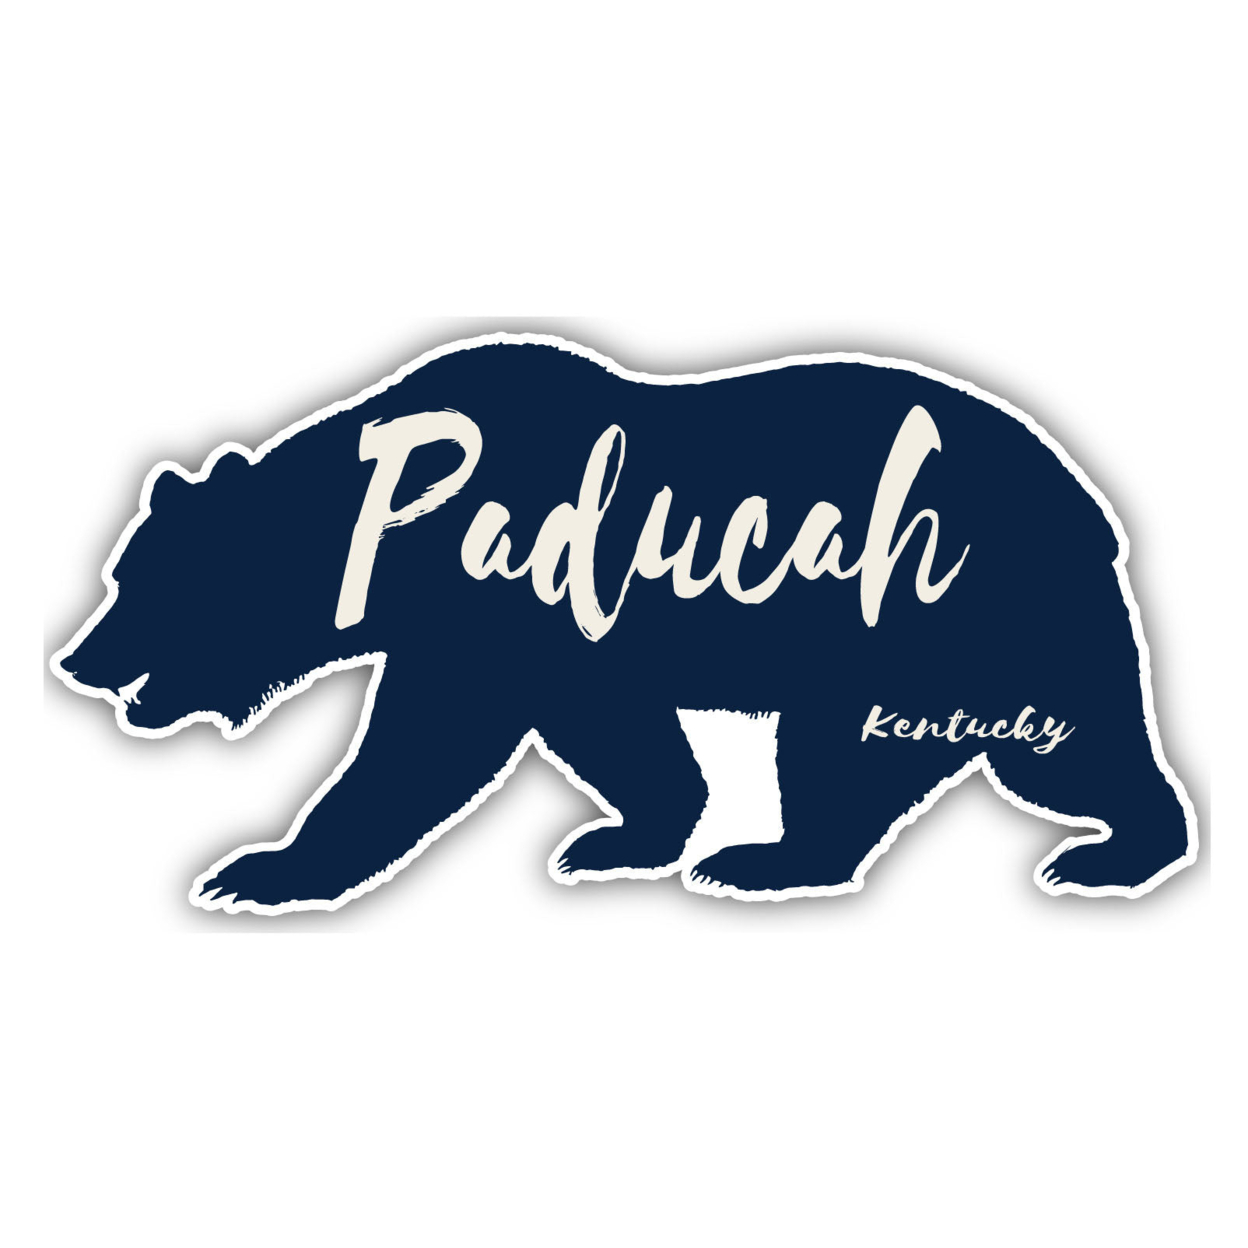 Paducah Kentucky Souvenir Decorative Stickers (Choose Theme And Size) - Single Unit, 4-Inch, Tent